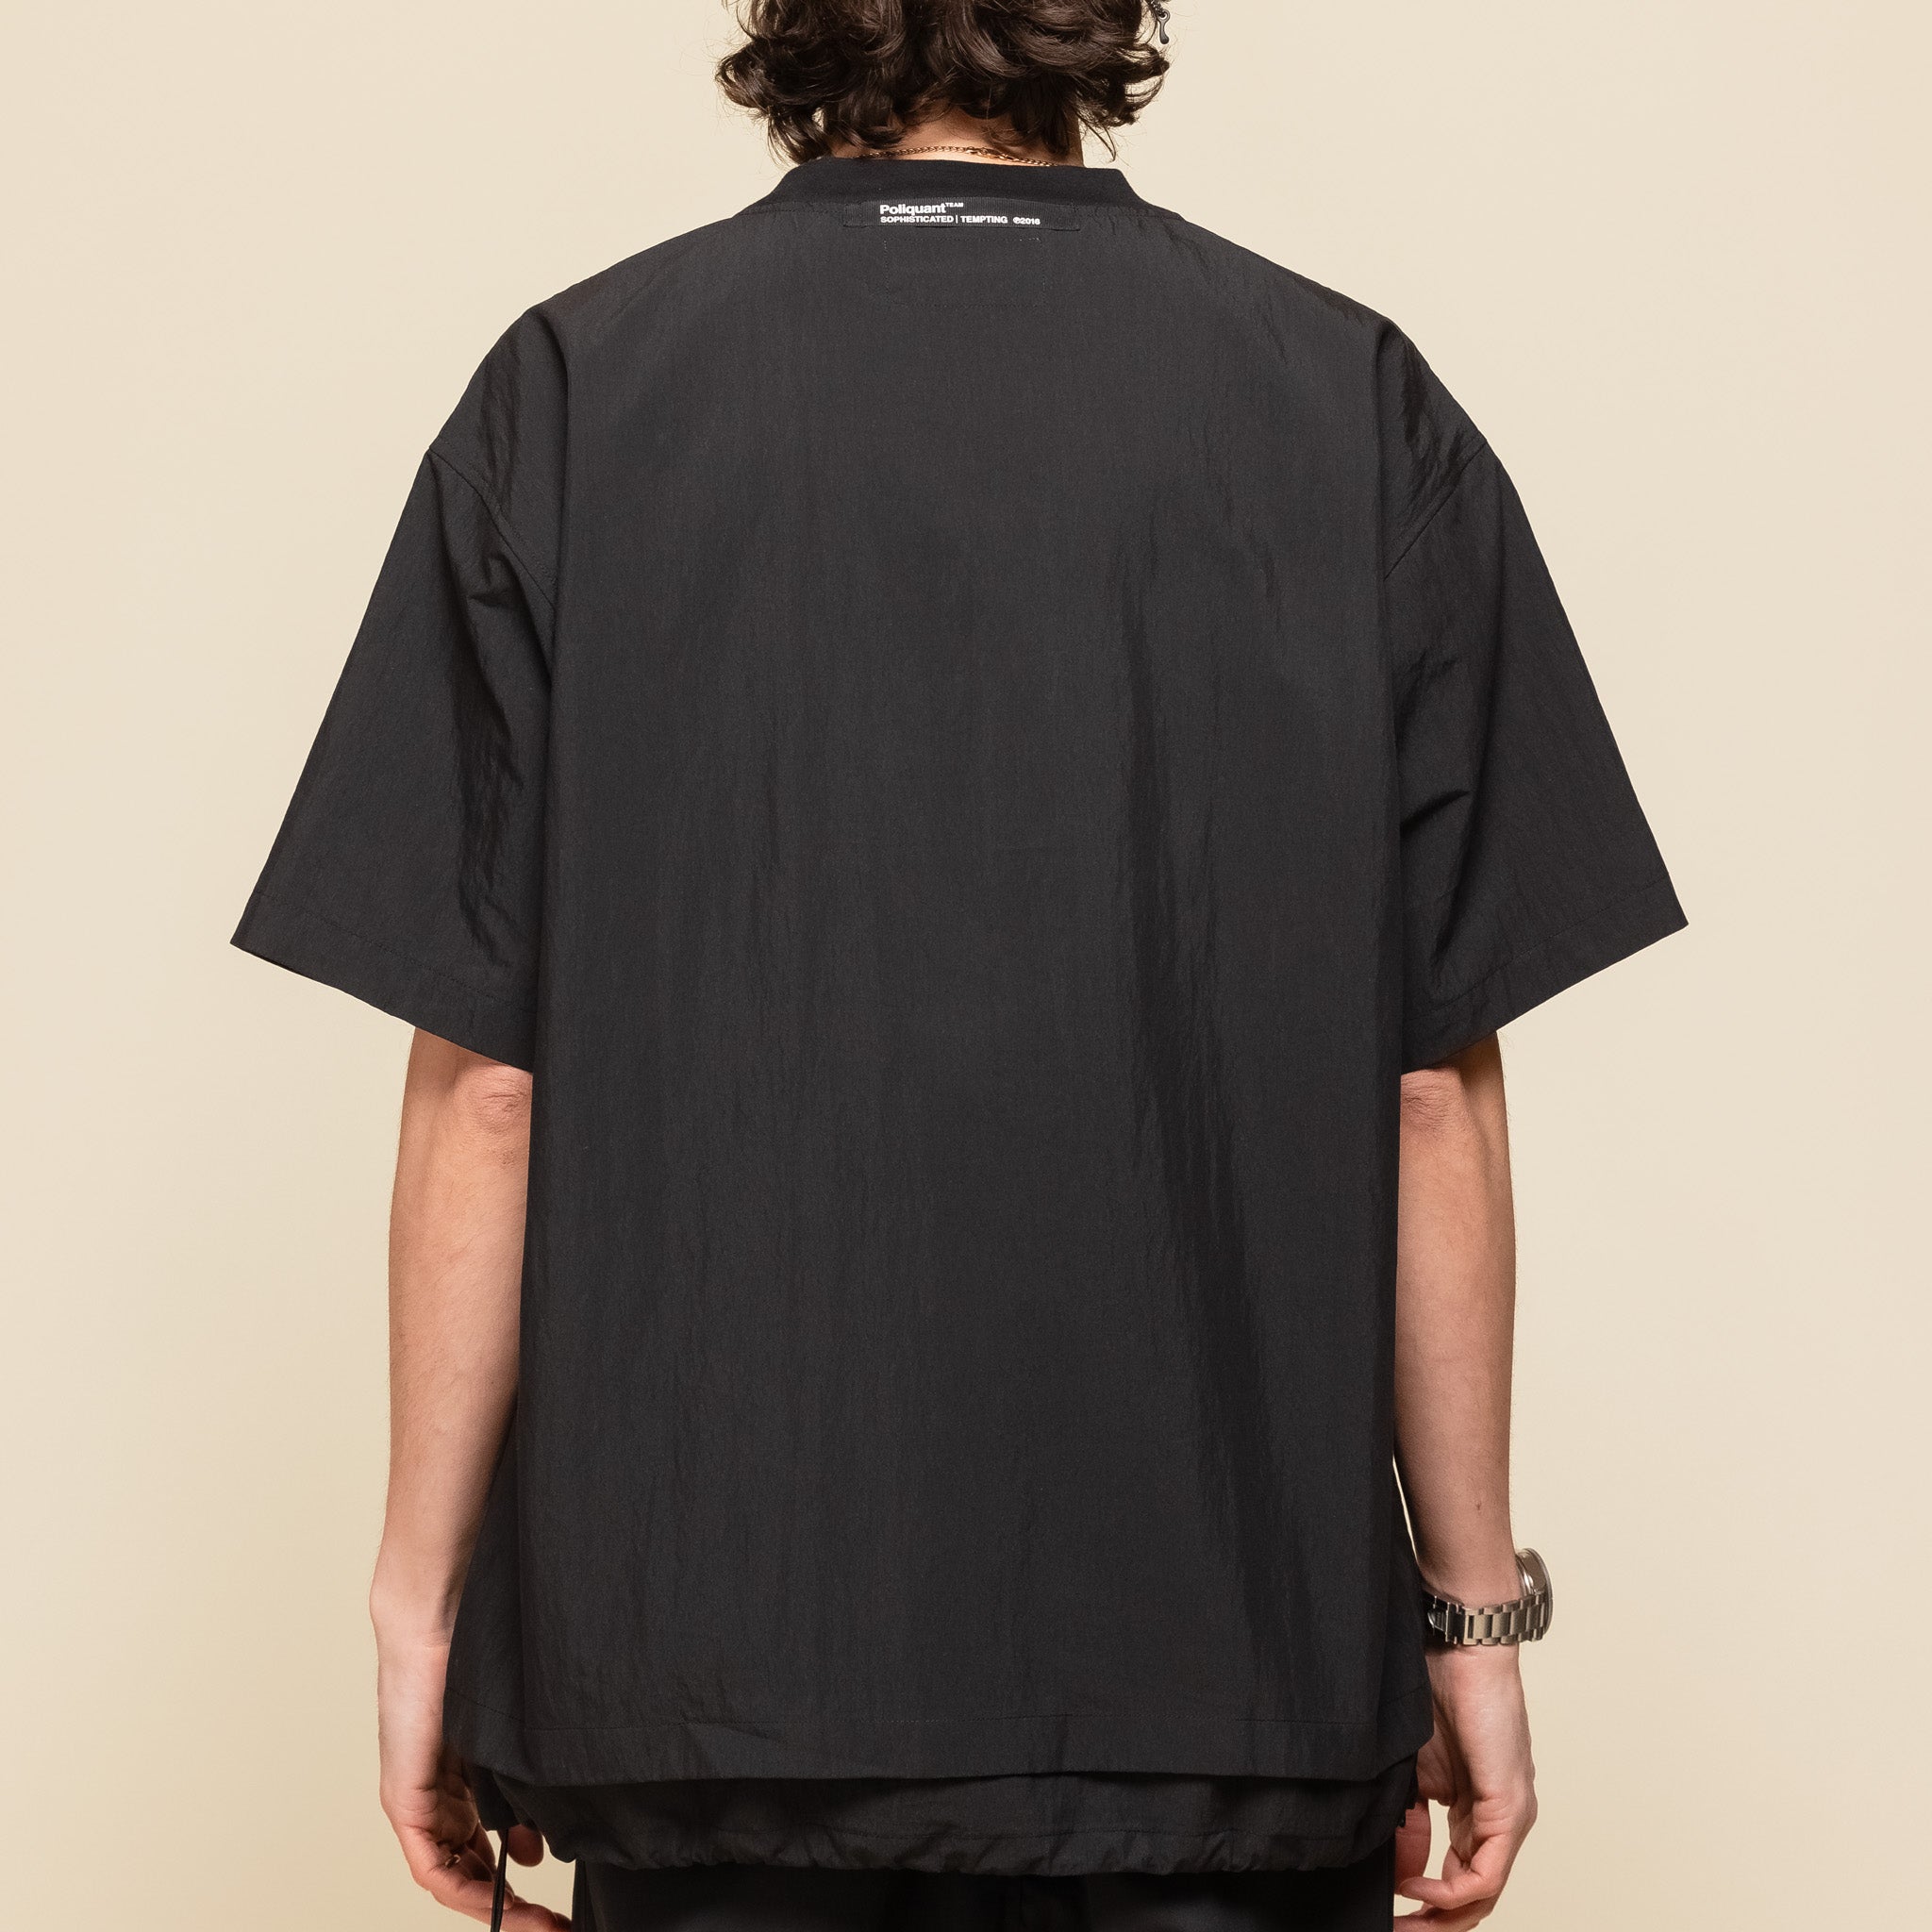 Poliquant - Deformed Windbreaker T-Shirt With Ventilation - Black "poliquant stockist" "poliquant website" "poliquant t-shirt"